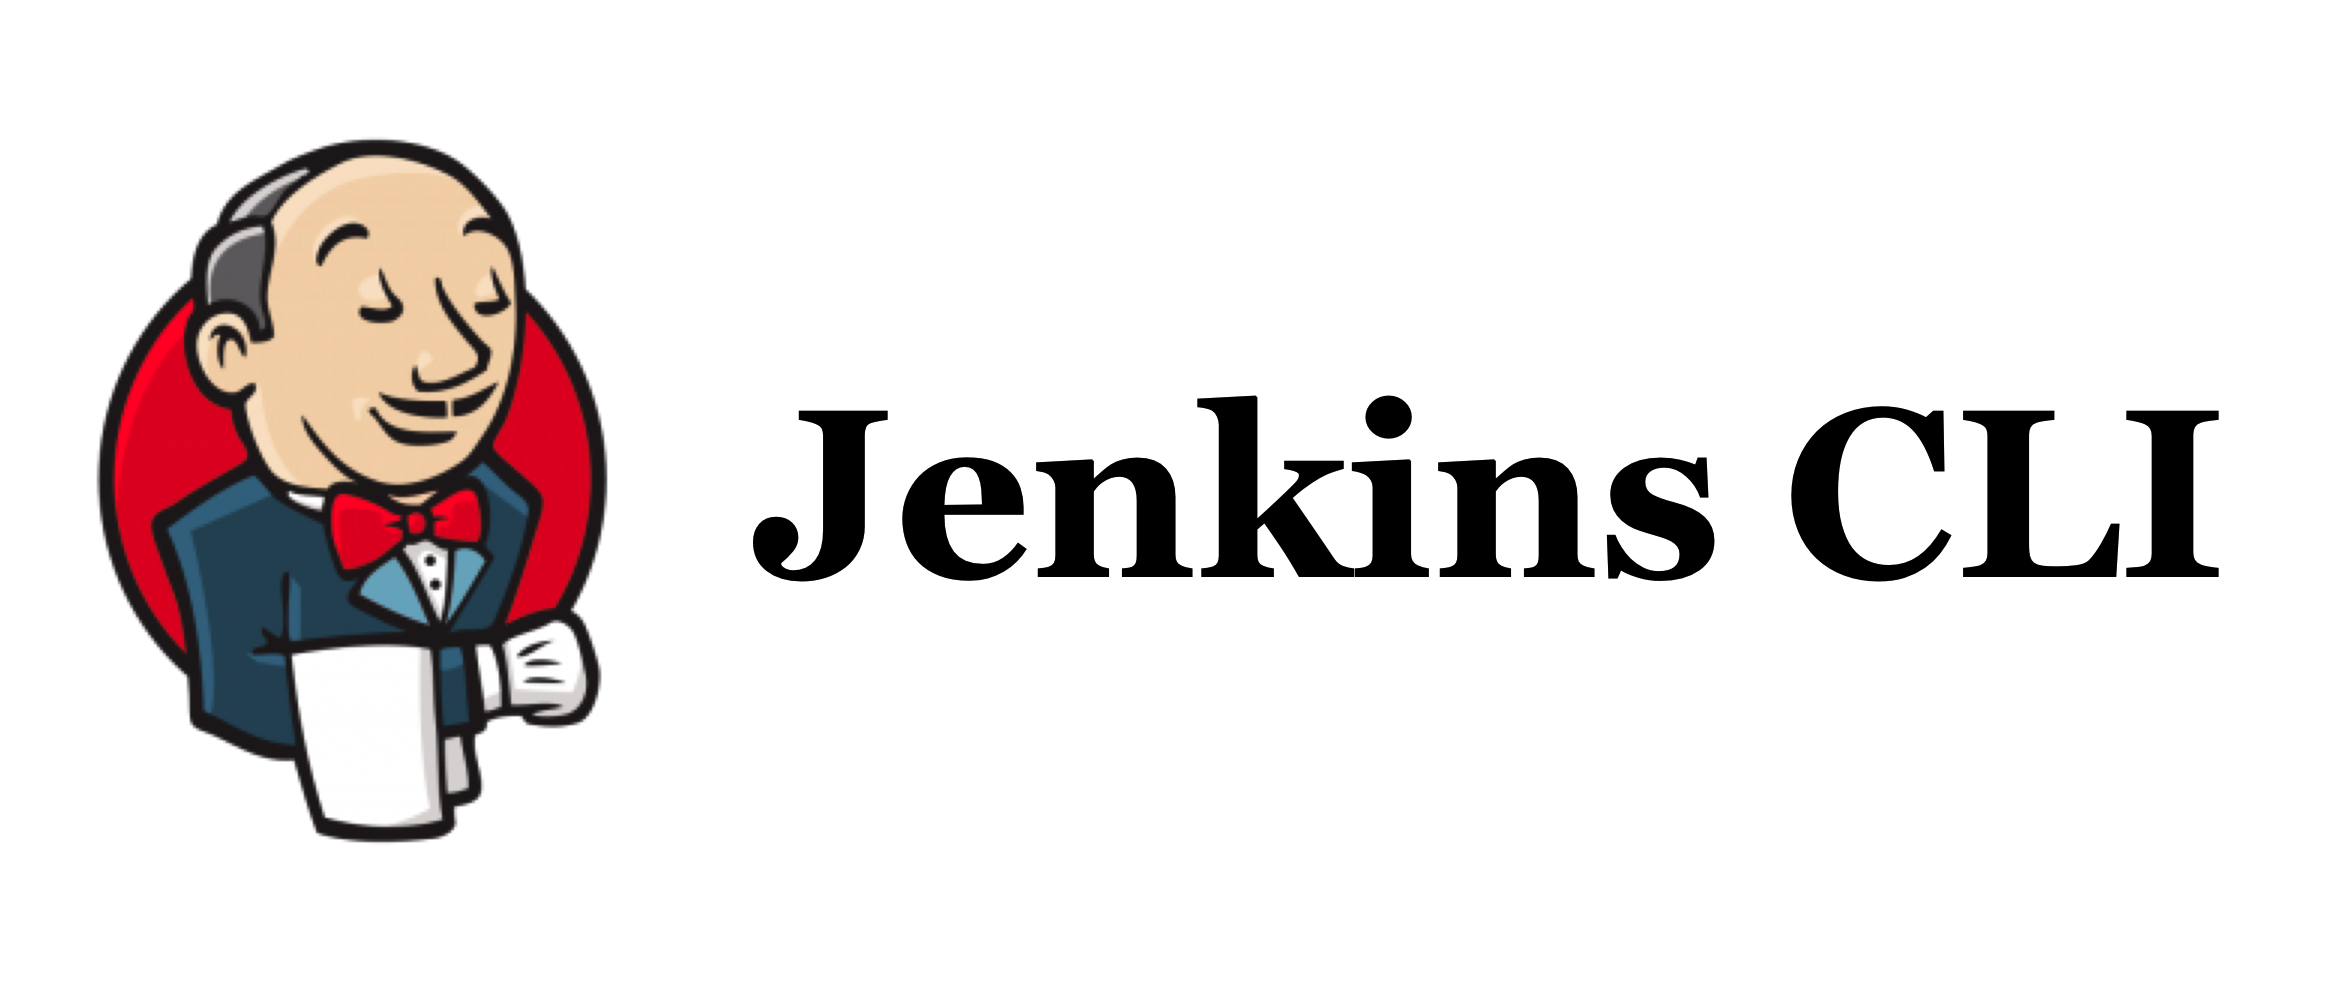 jenkins-cli